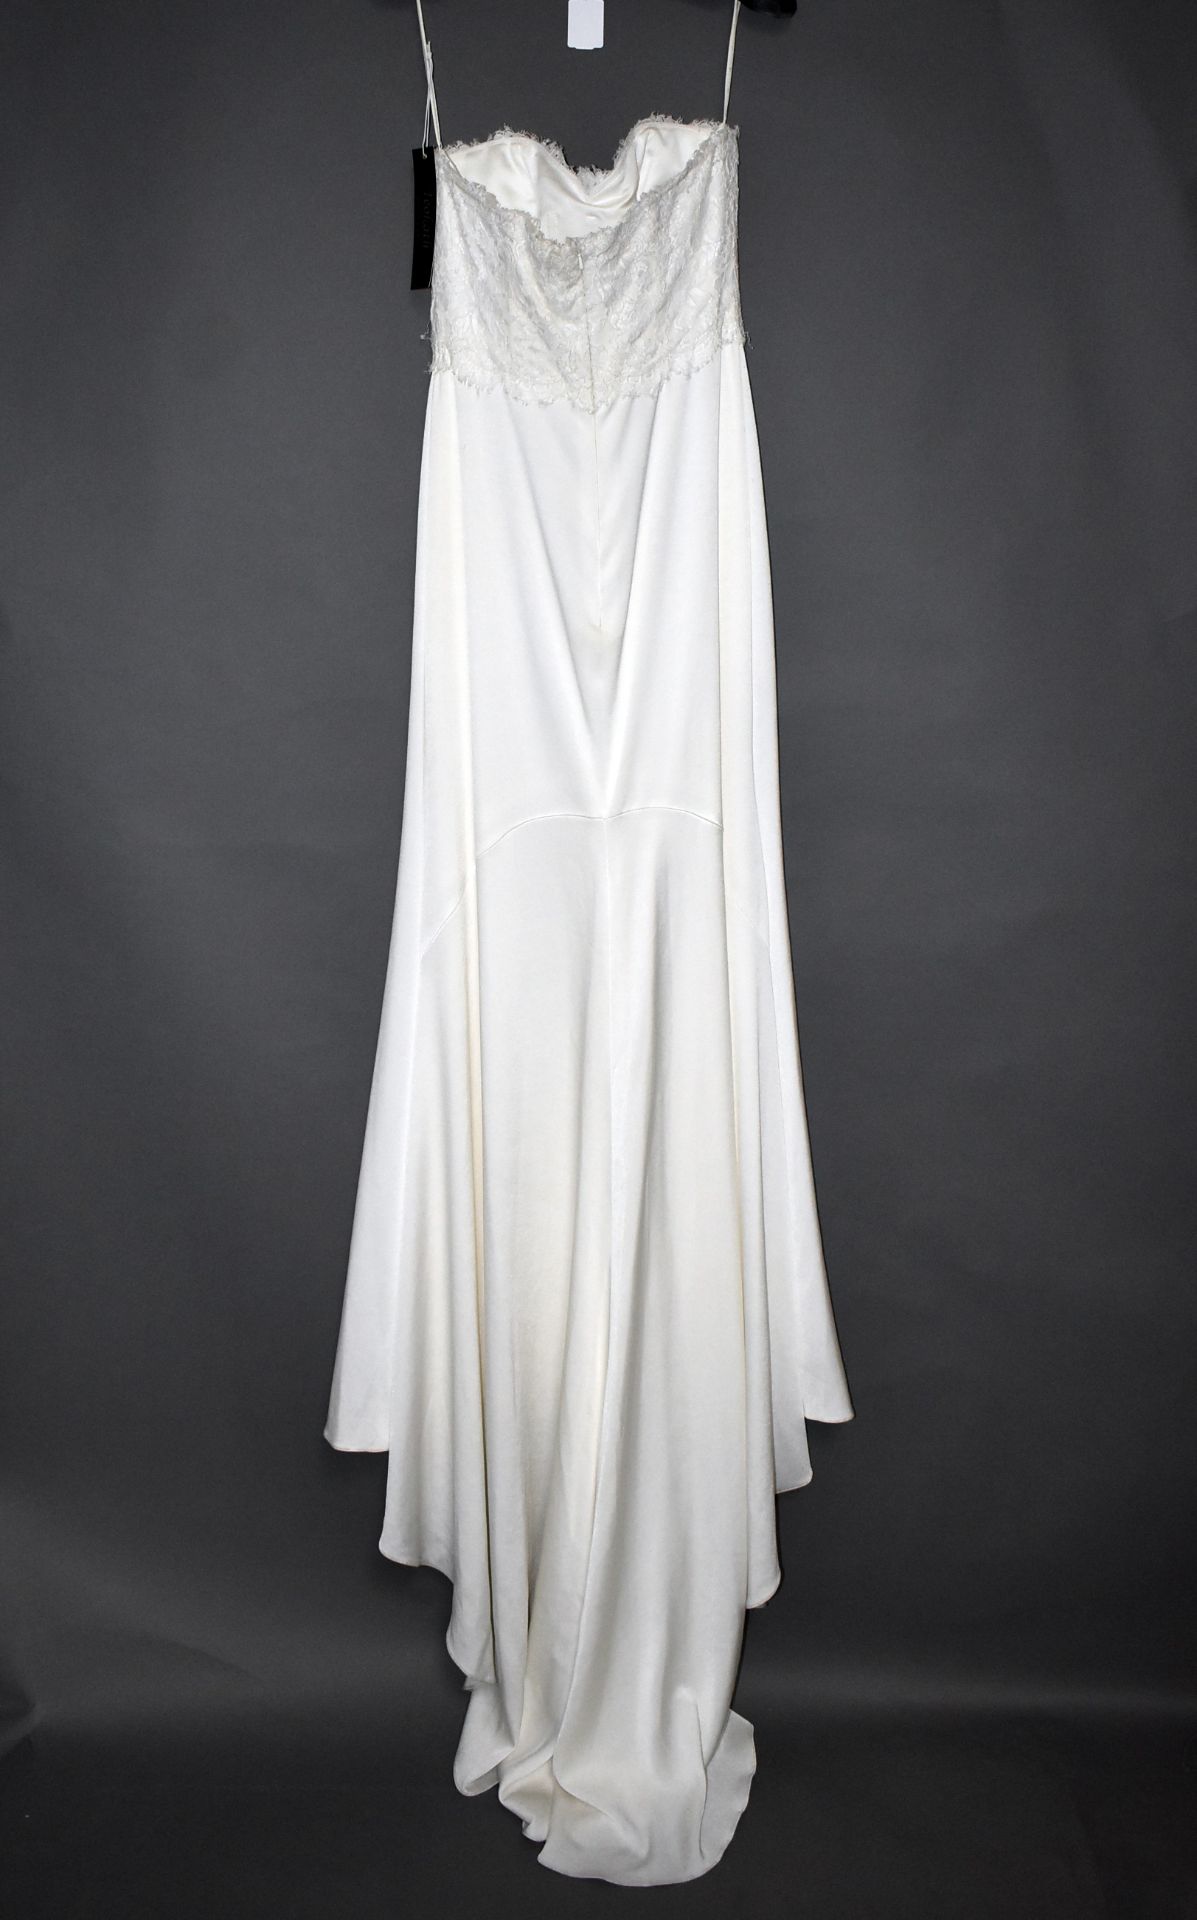 1 x LUSAN MANDONGUS Strapless Delicate Lace And Silk Designer Wedding Dress Bridal RRP £1,400 UK 12 - Image 2 of 6